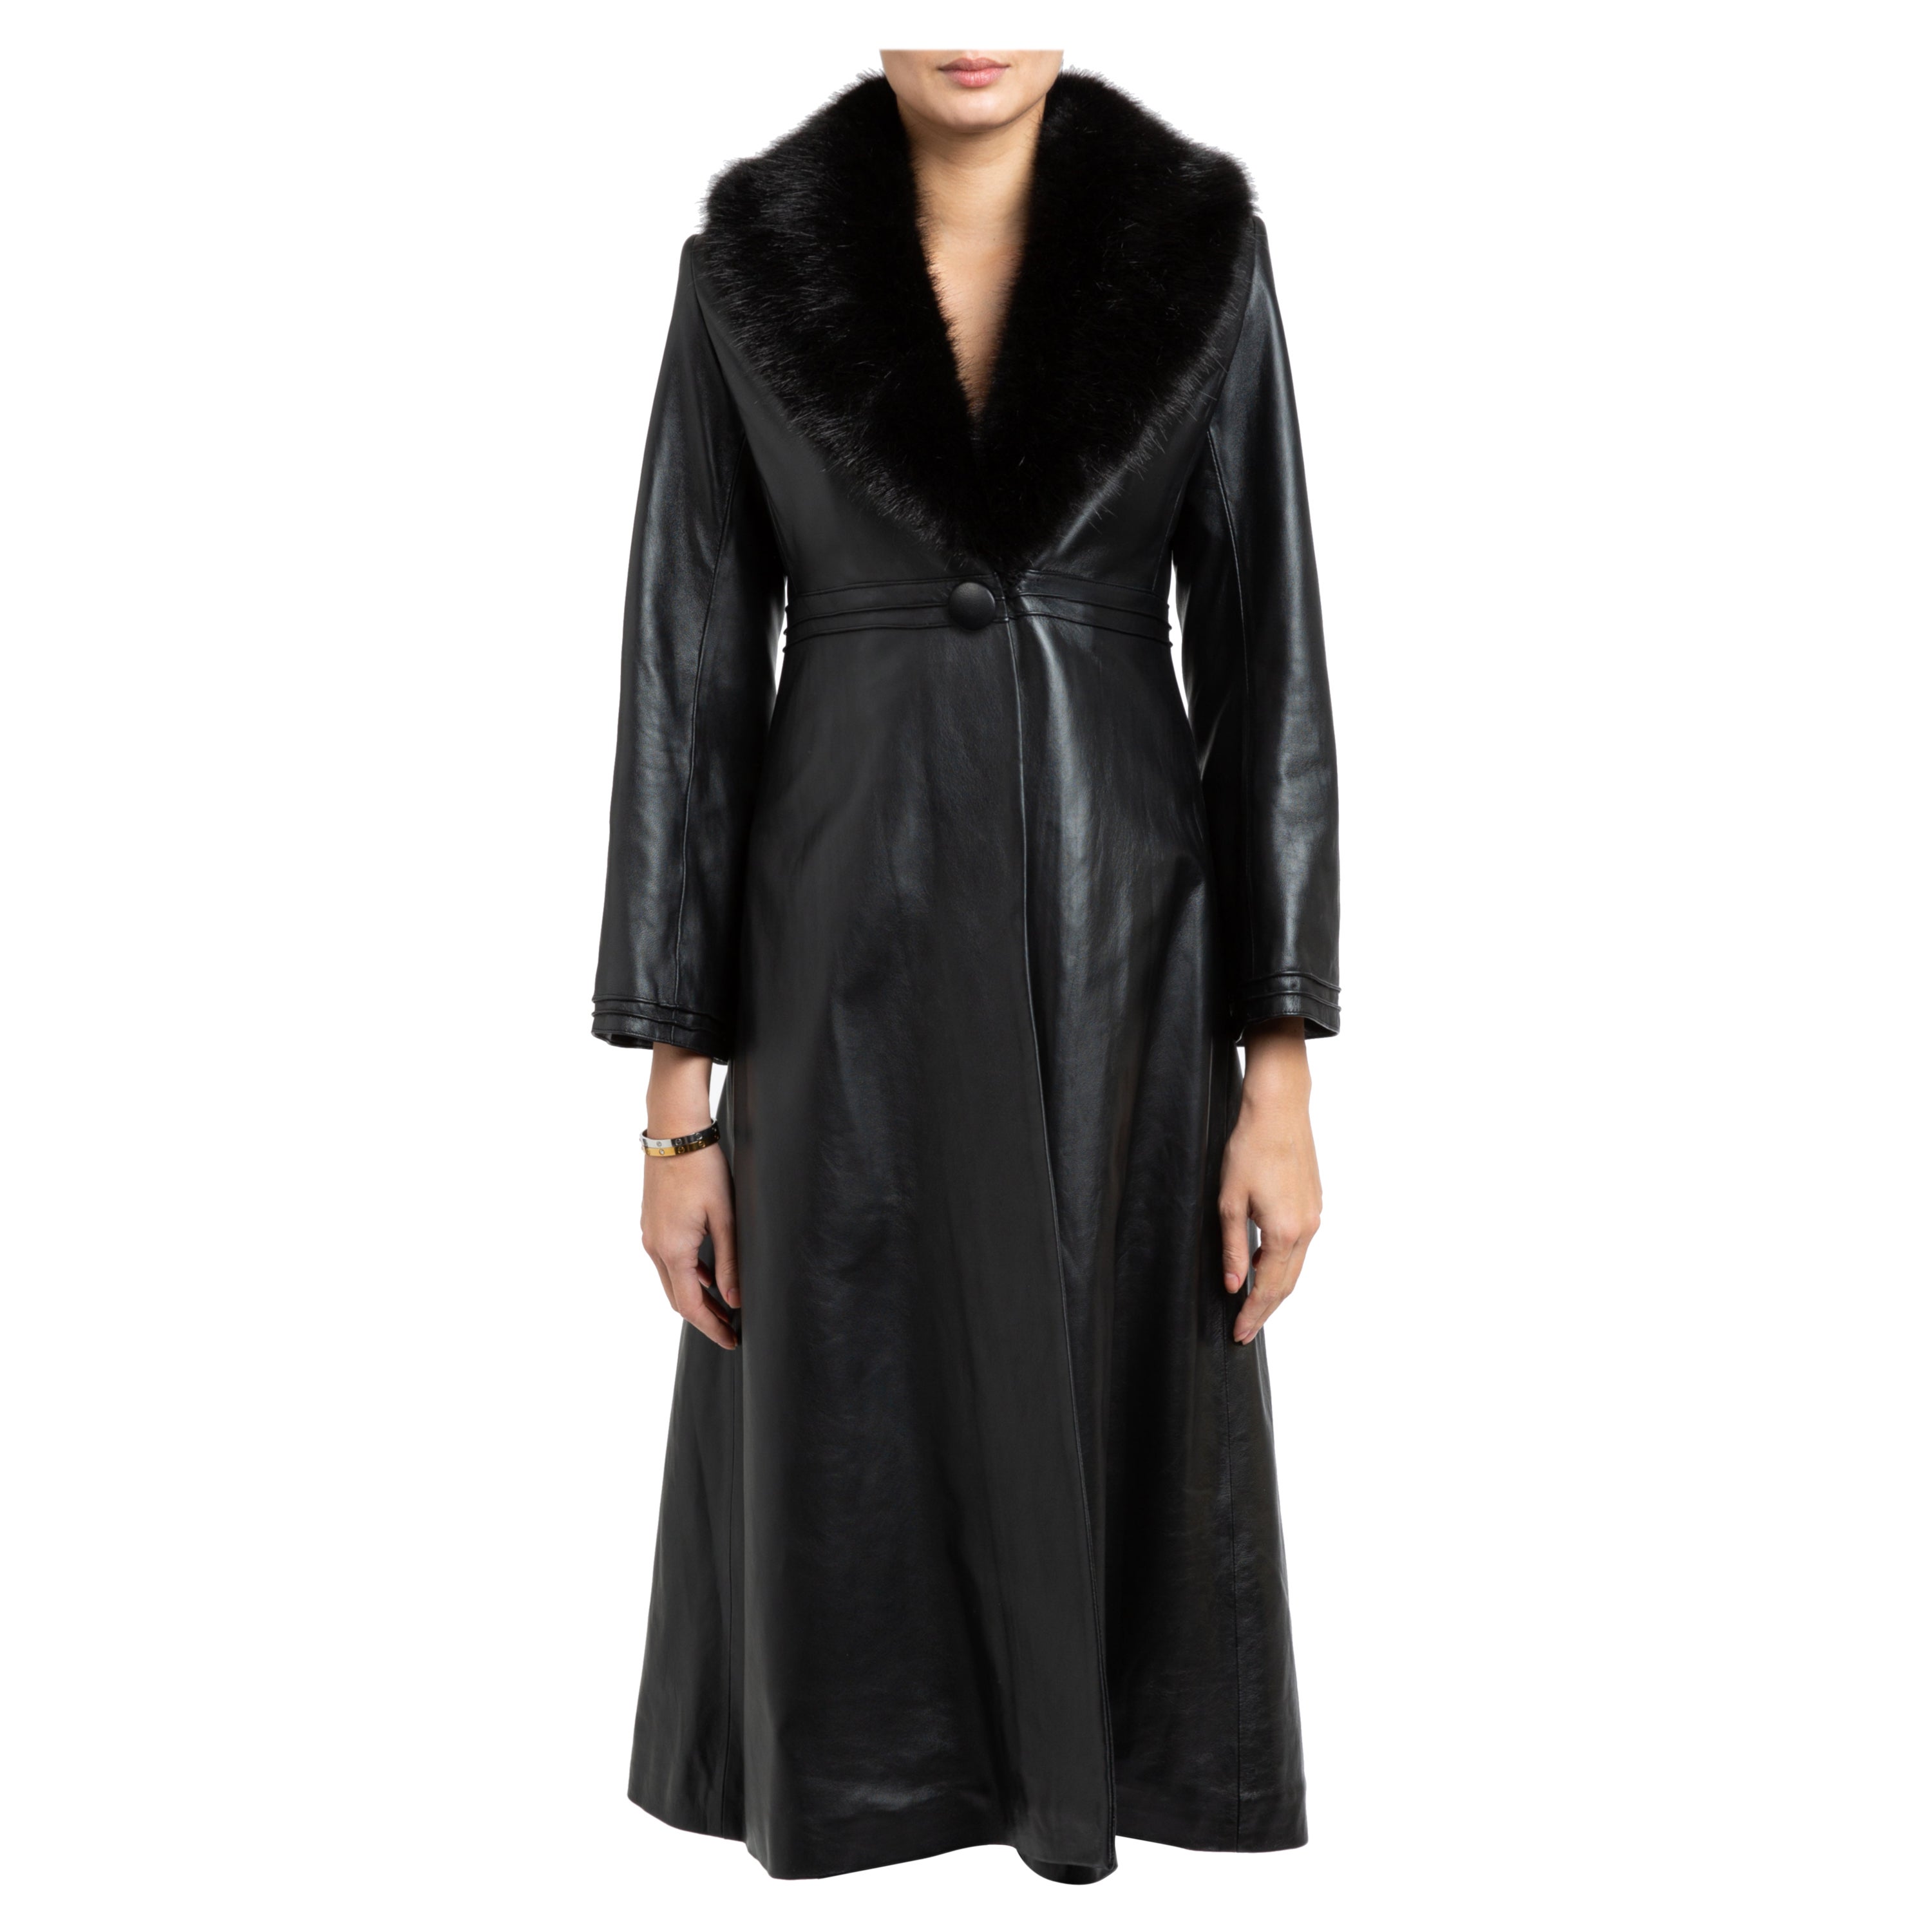 Verheyen London Edward Leather Coat with Faux Fur Collar in Black - Size uk 12 For Sale